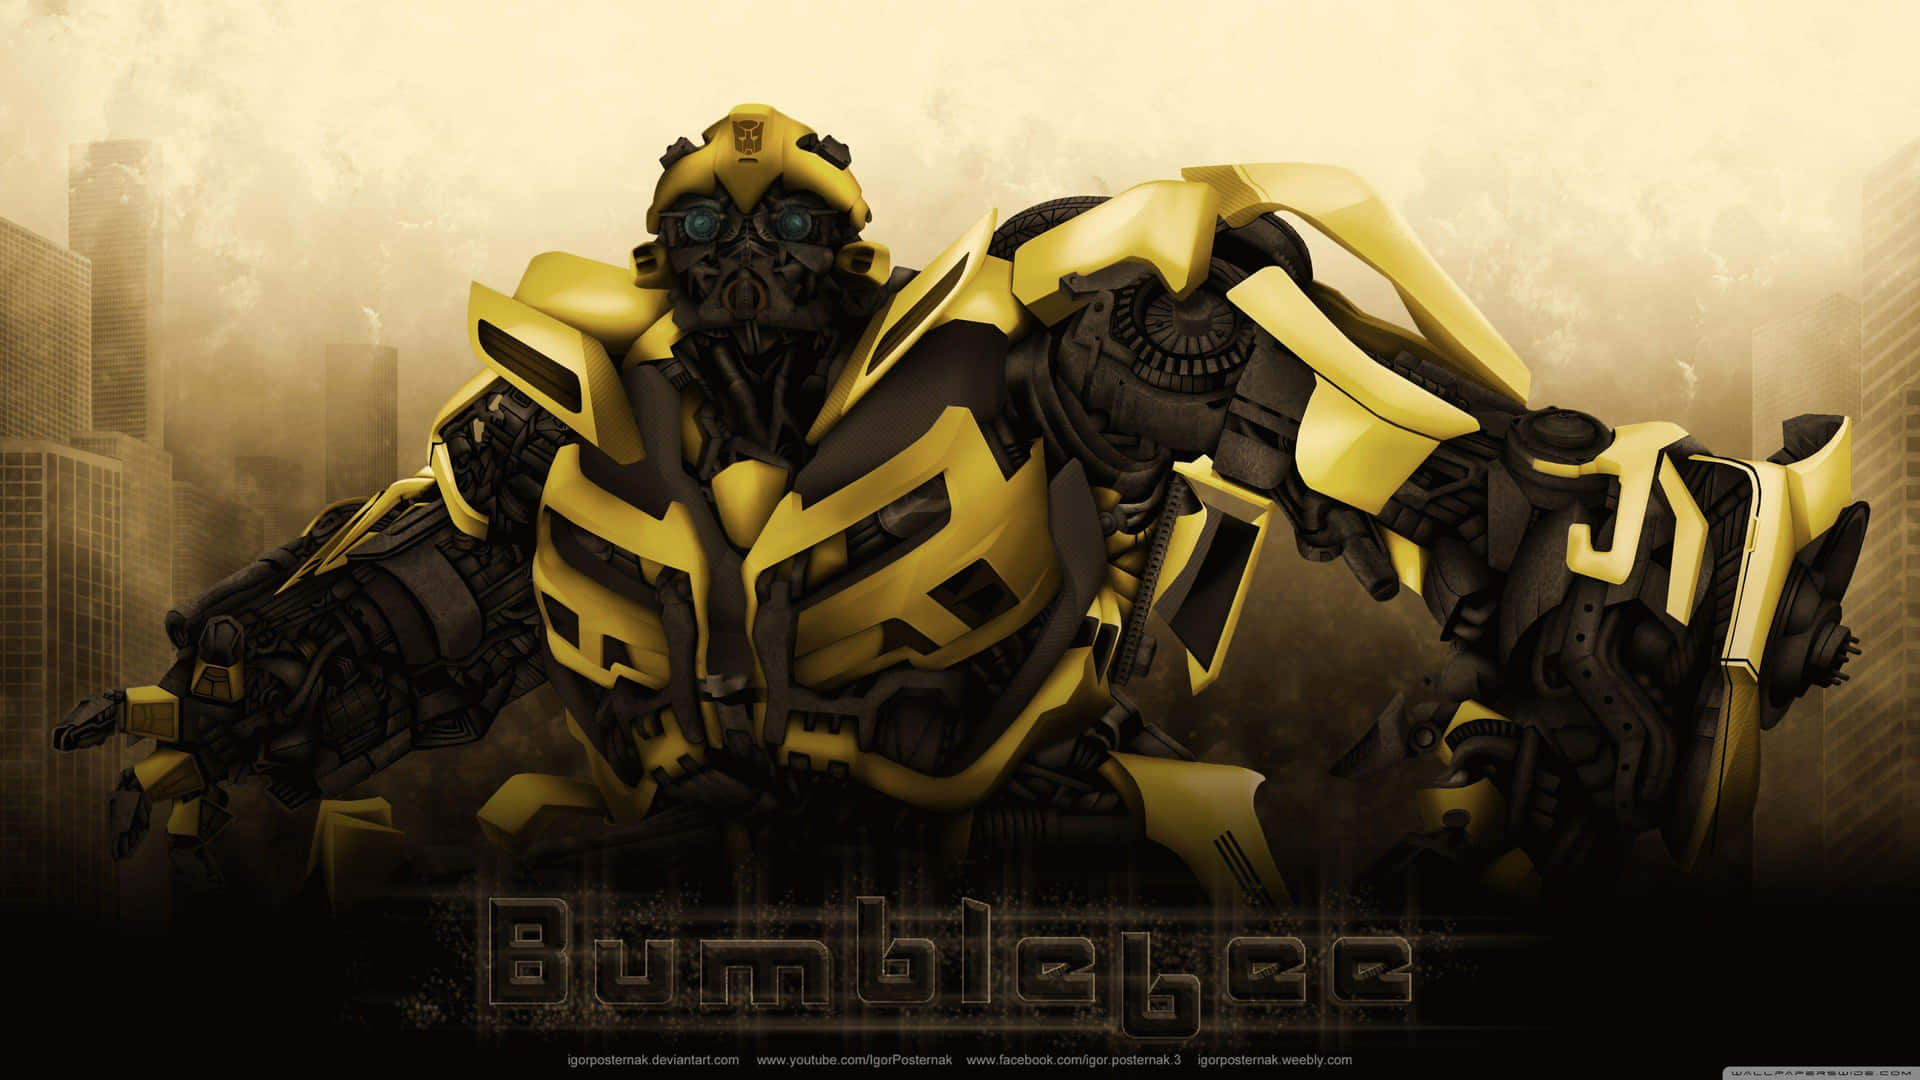 Bumblebeeomvandlas Till Stridsklar Robot. Wallpaper